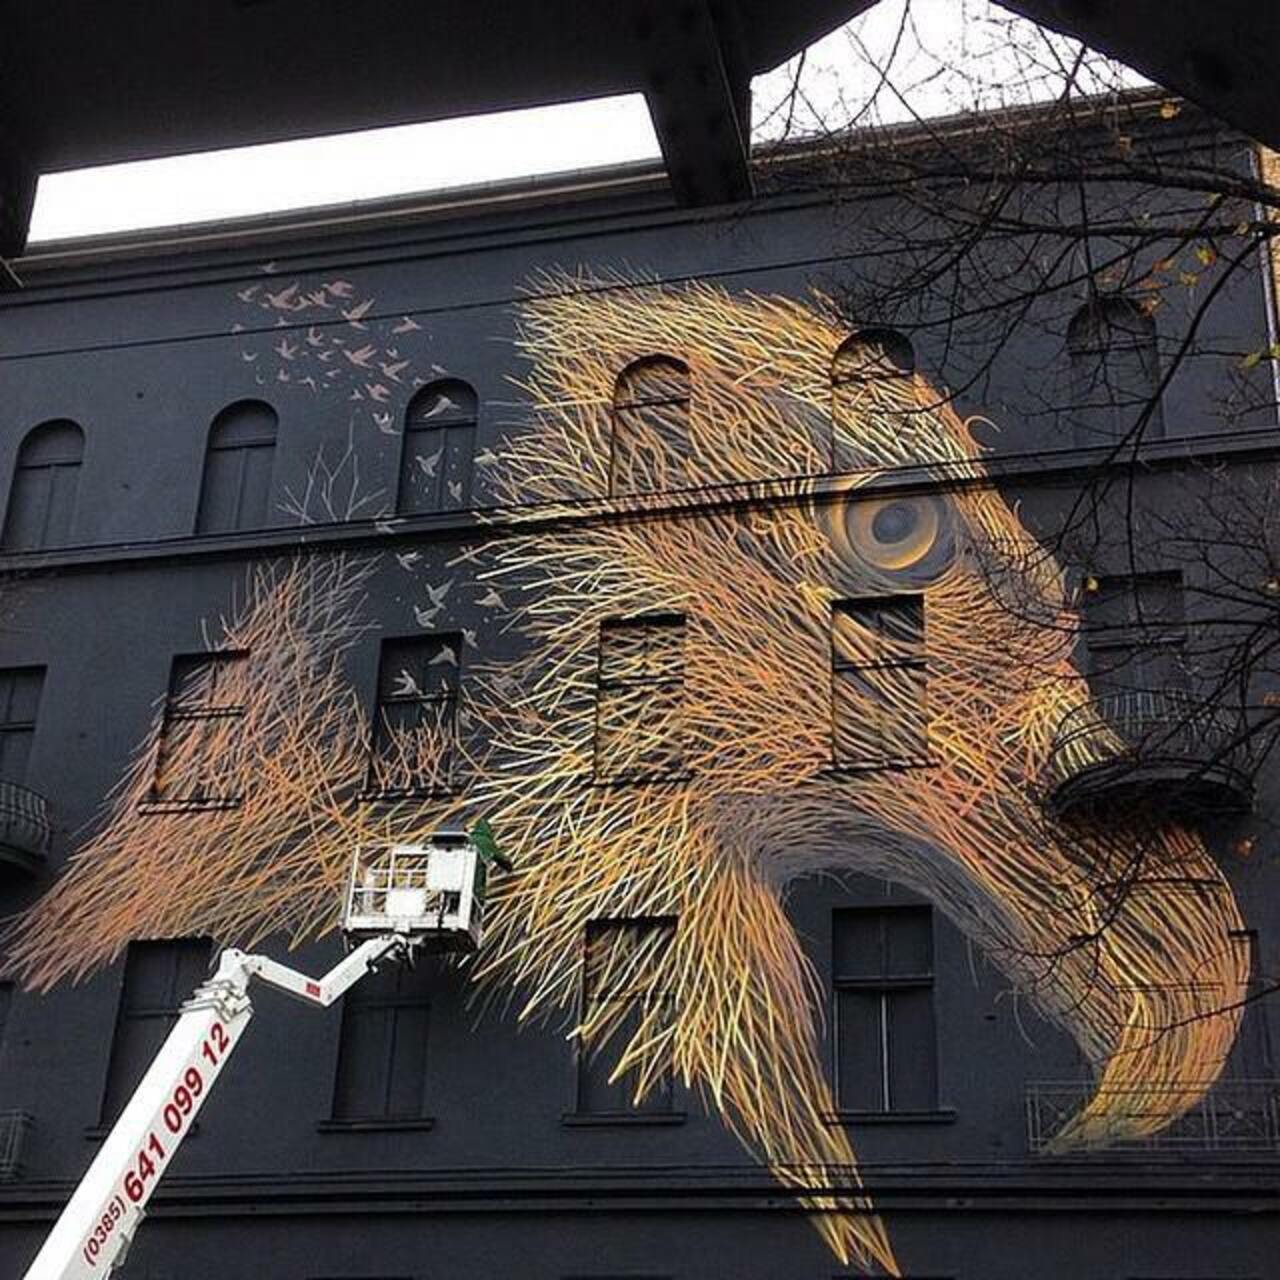 "@upbyartists: DALEAST in progress #Berlin 
#streetart #illustrator #graffiti #art #gallery http://t.co/pZbDHV8YXD"